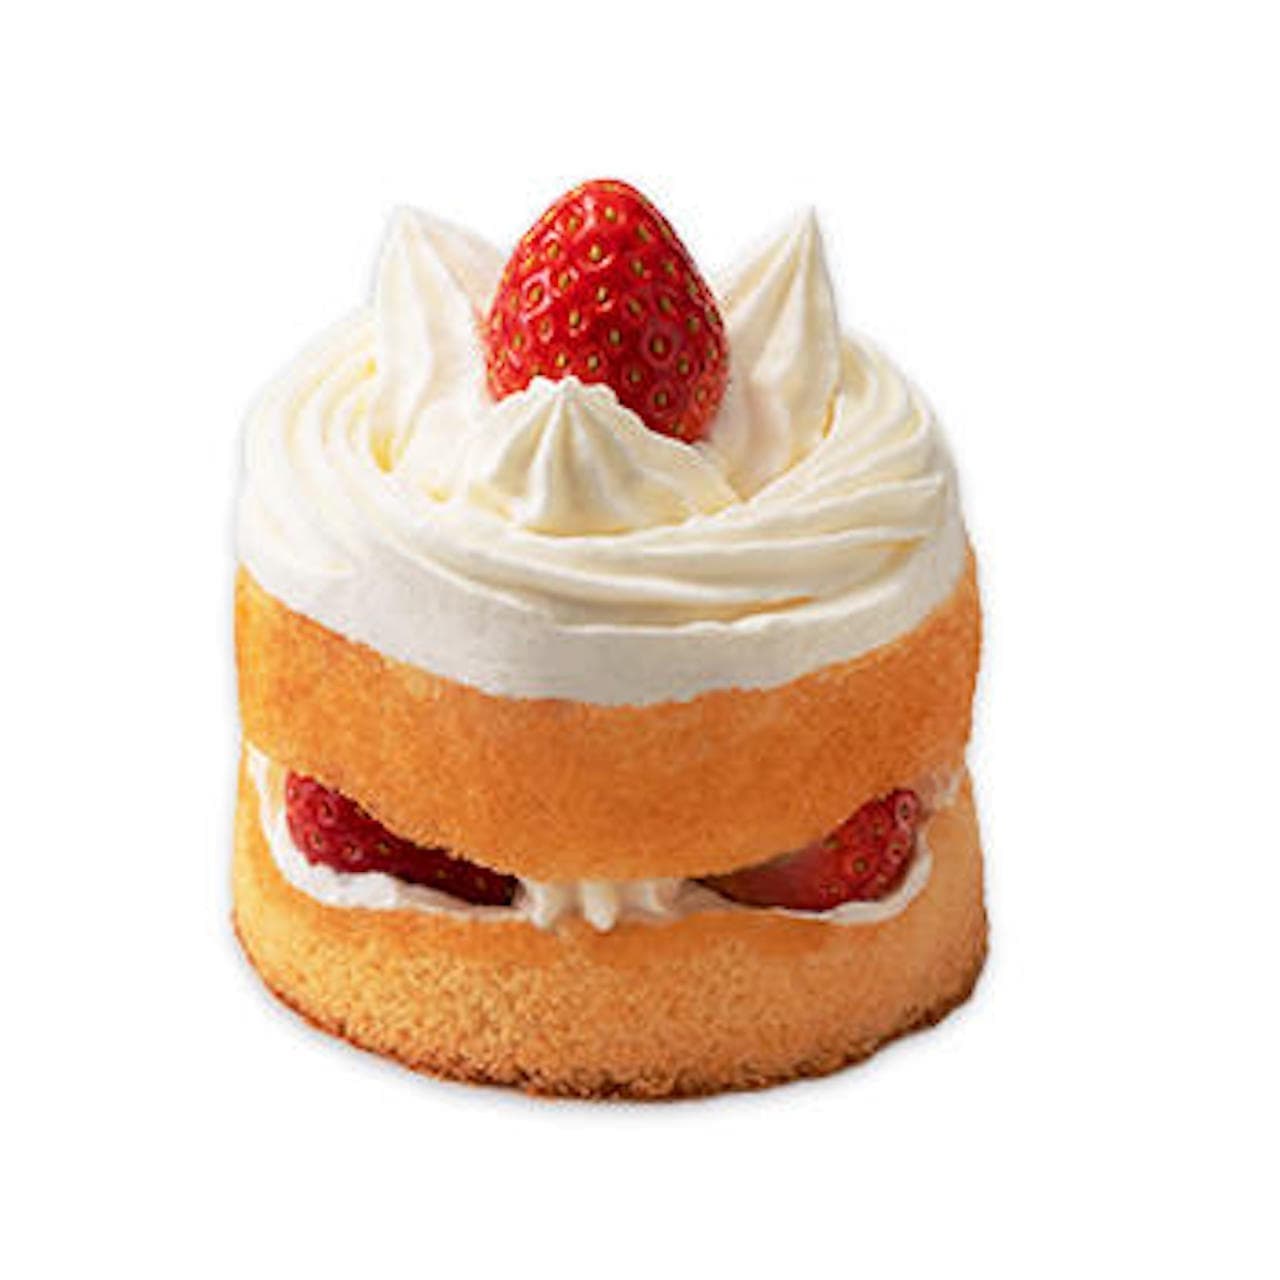 Fujiya "Taste of Tradition: Fujiya's Shortcake".